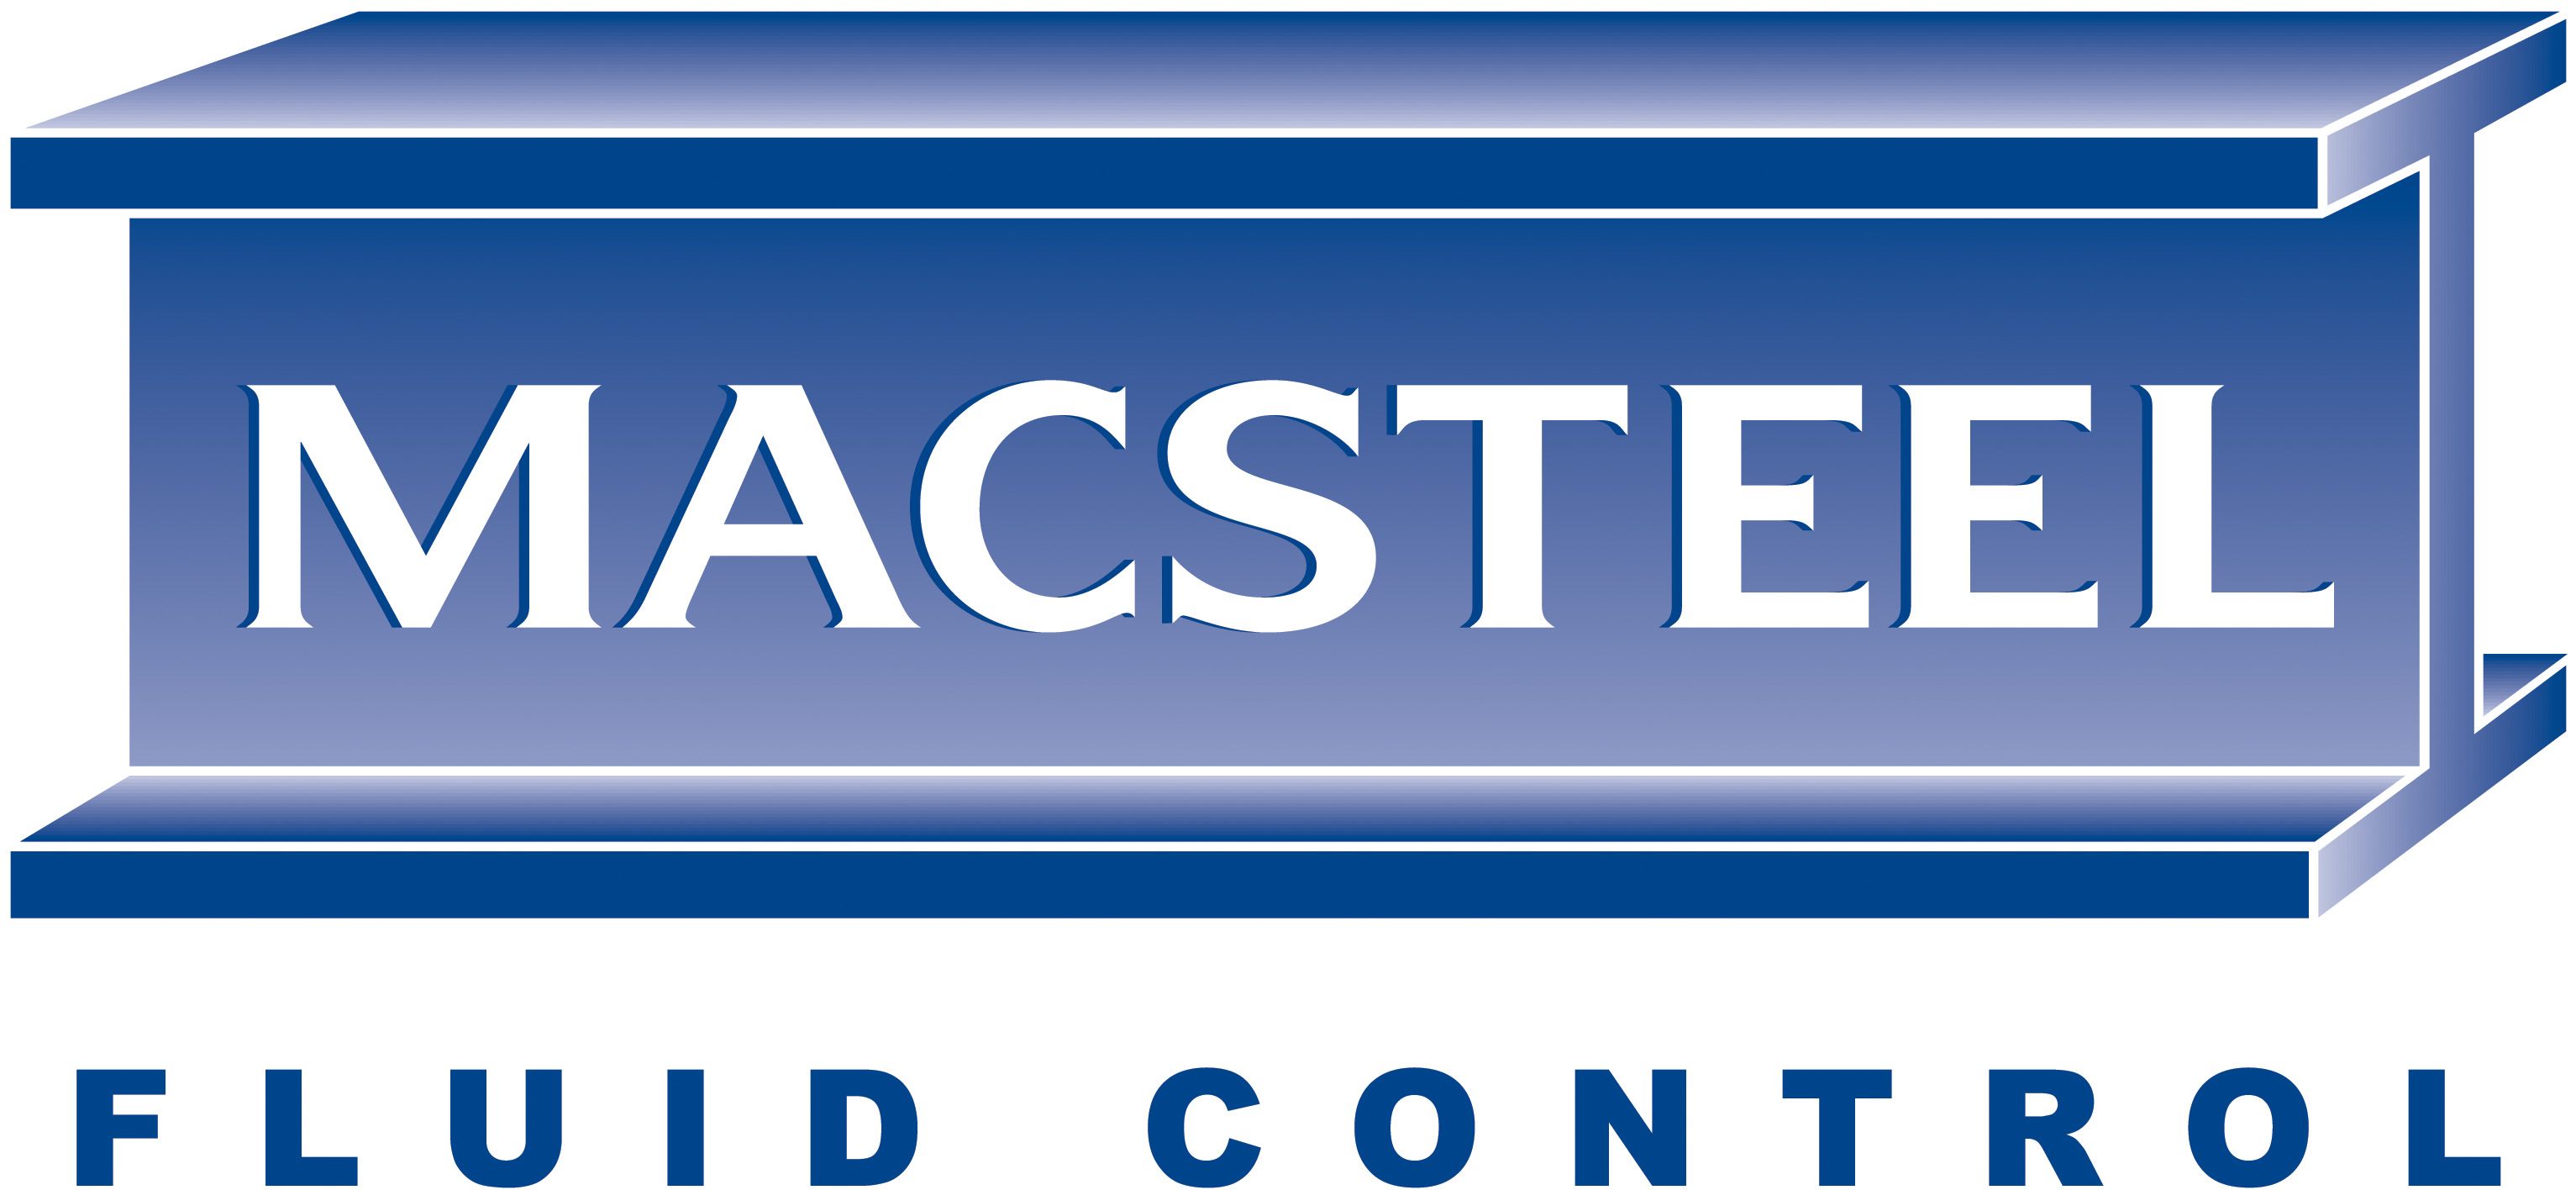 Macsteel Fluid Control - Boksburg logo